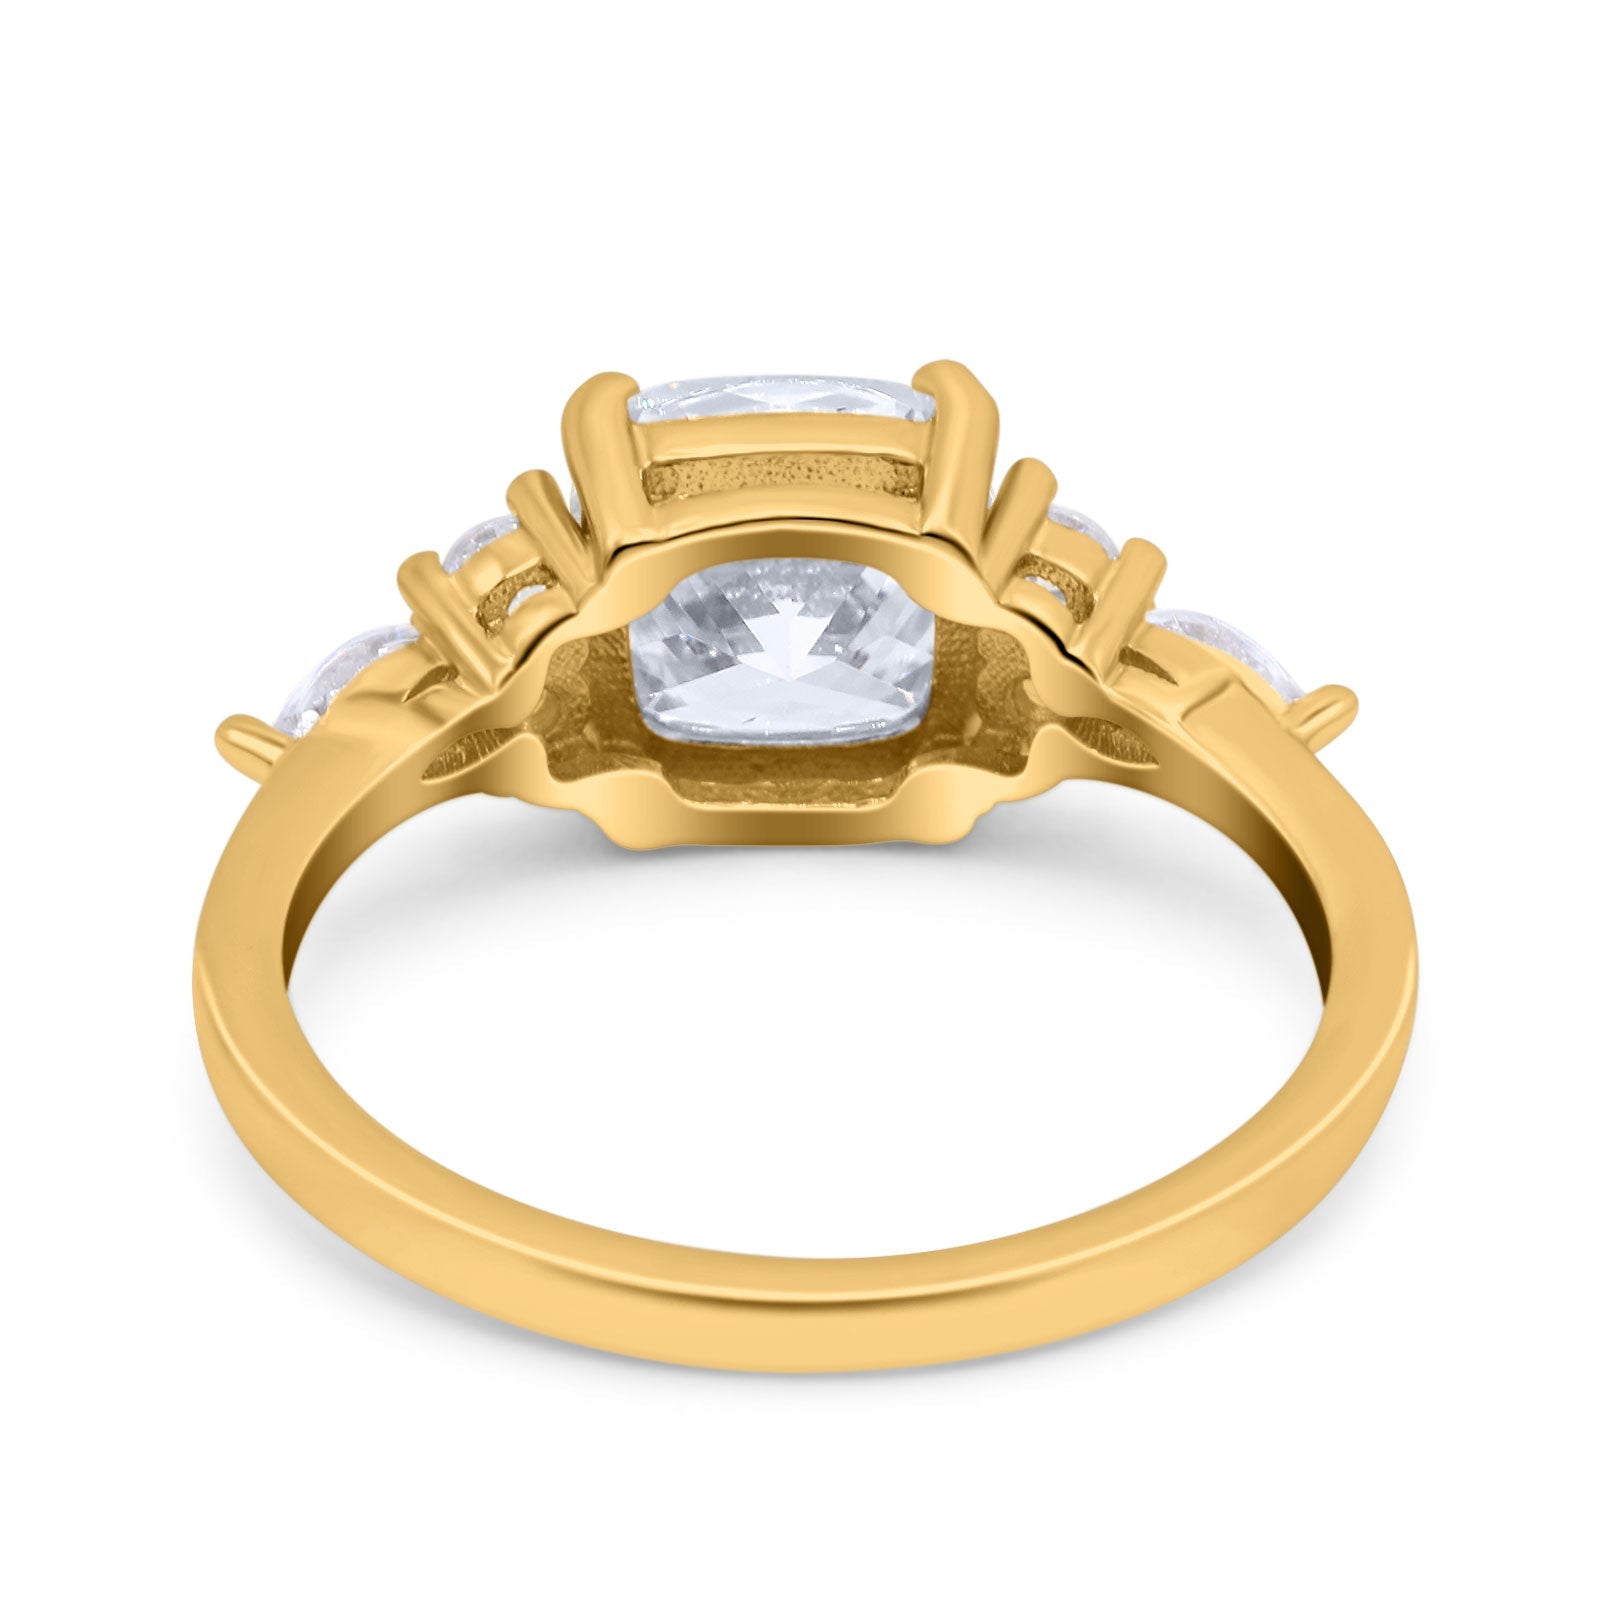 14K Gold Cushion Cut Shape Art Deco Bridal Wedding Engagement Ring Simulated Cubic Zirconia